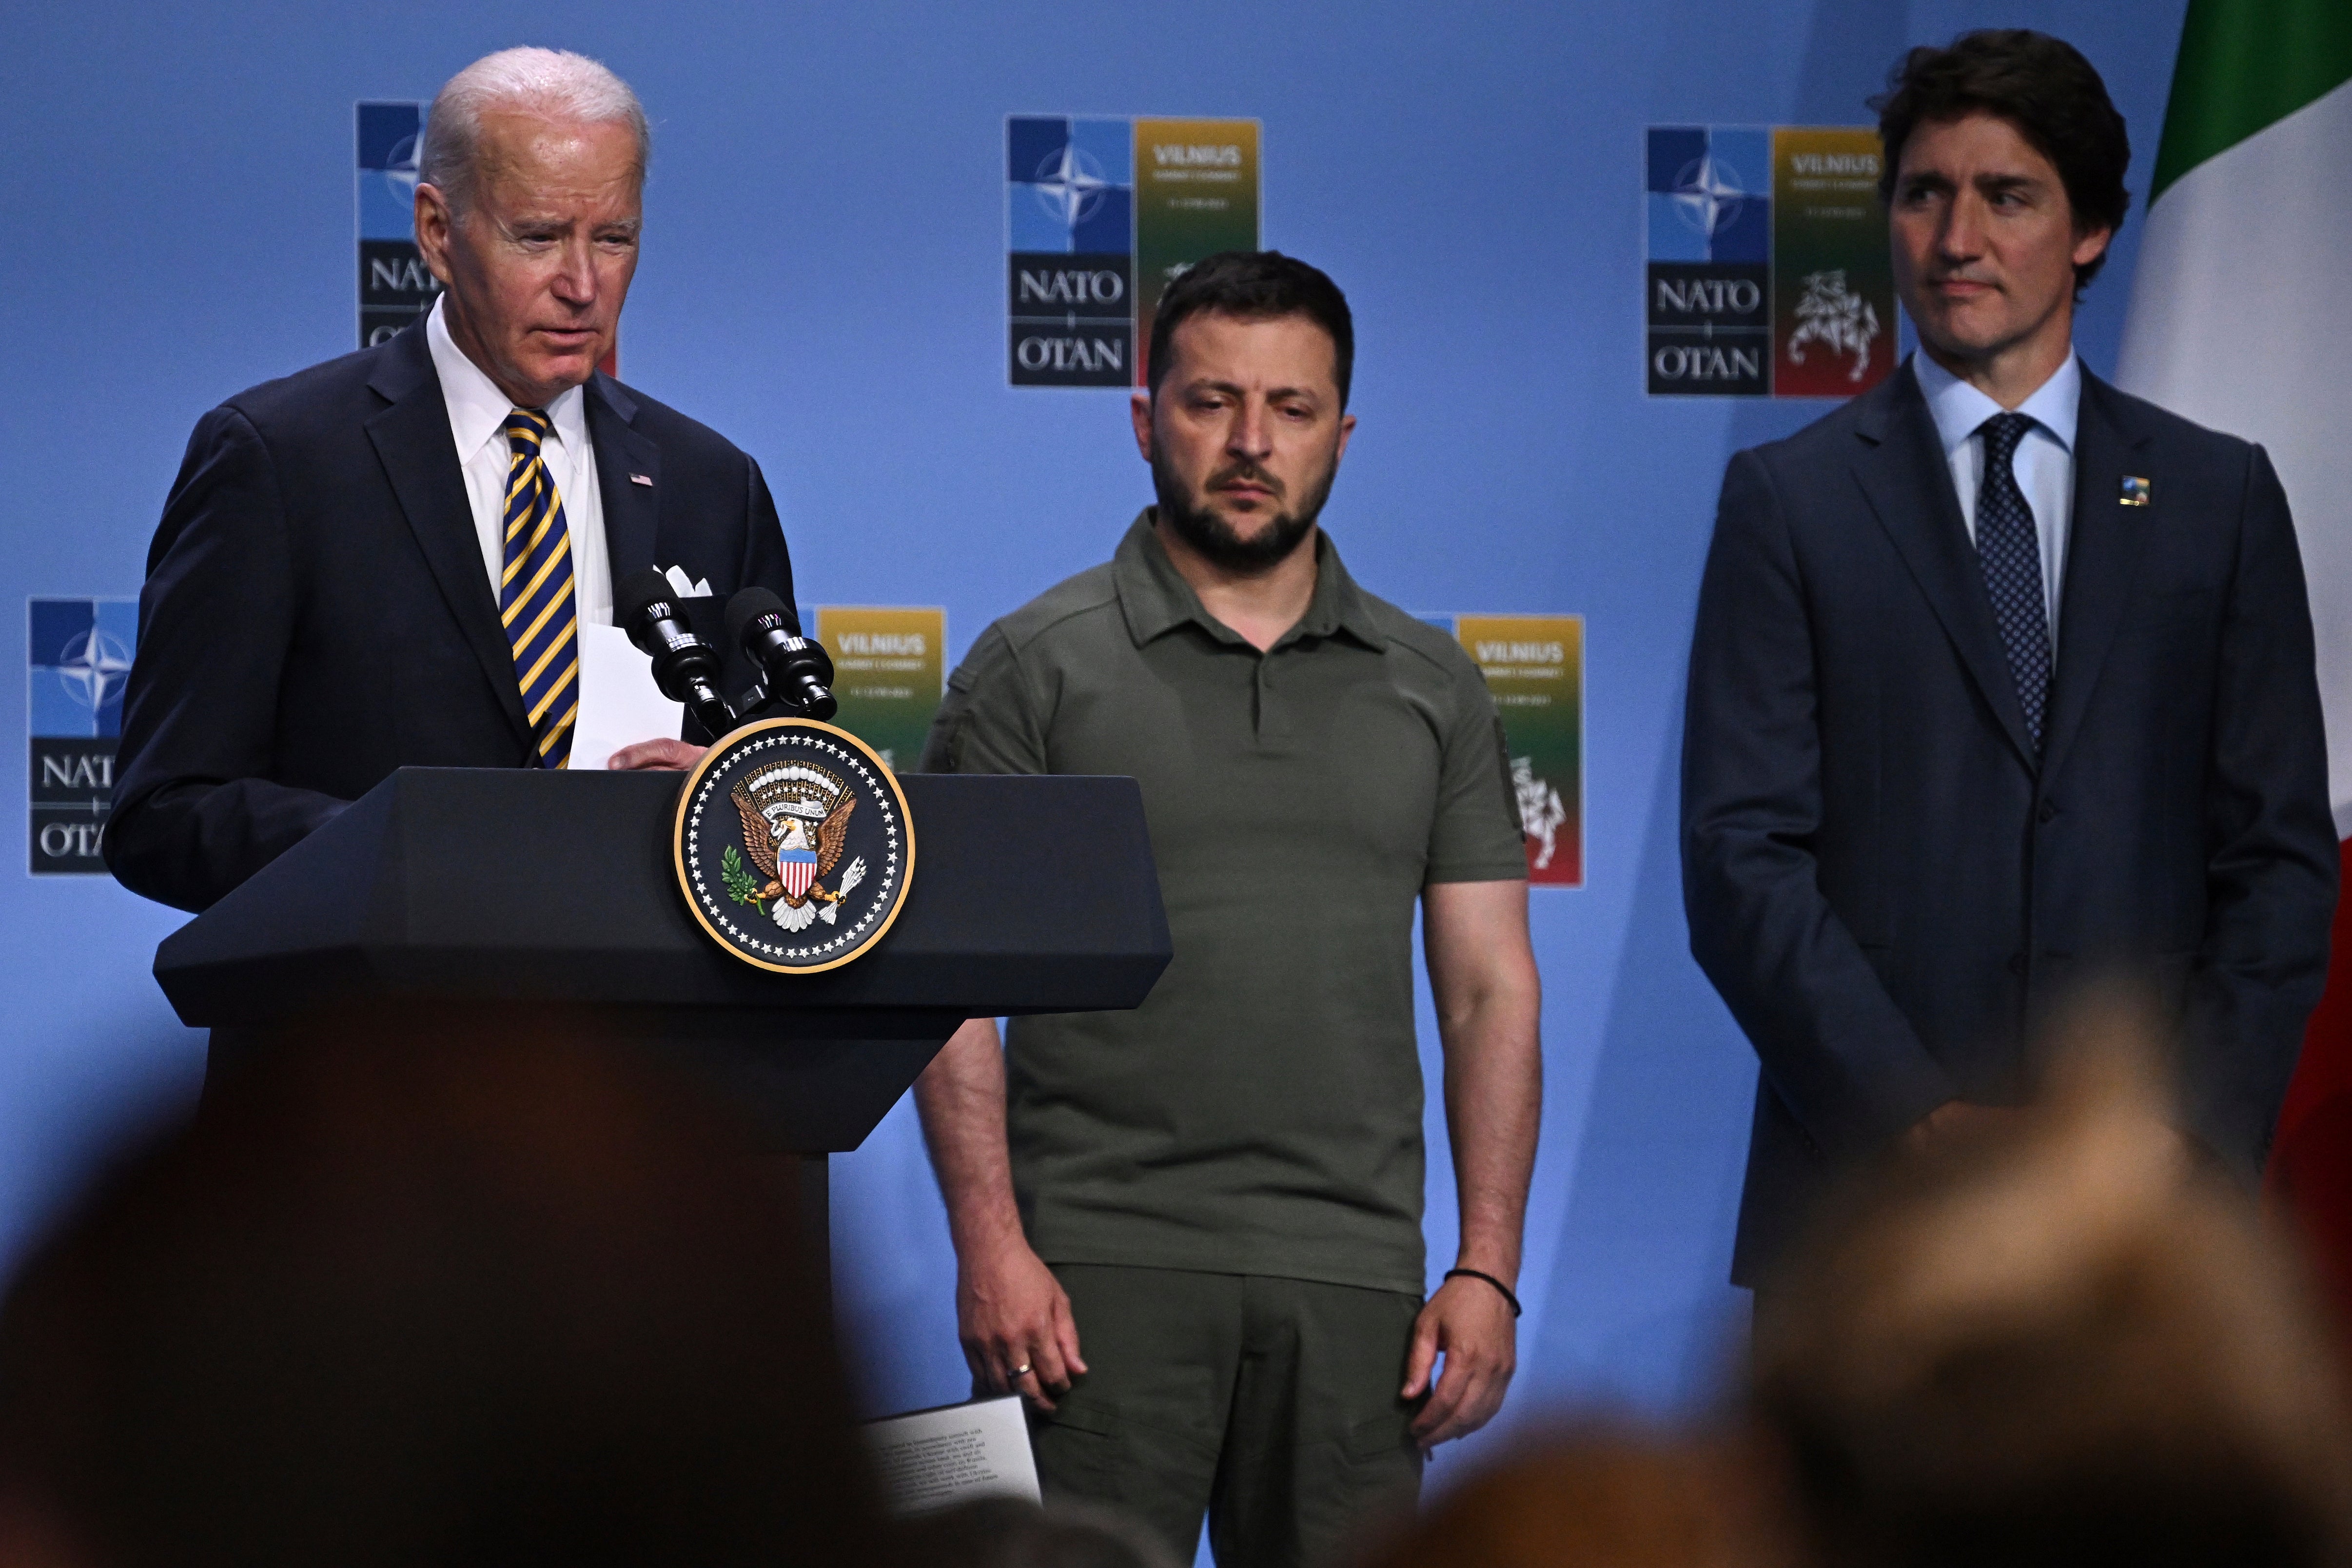 President Joe Biden makes remarks at the Nato Summit in Vilnius, Lithuania, 12 July 2023